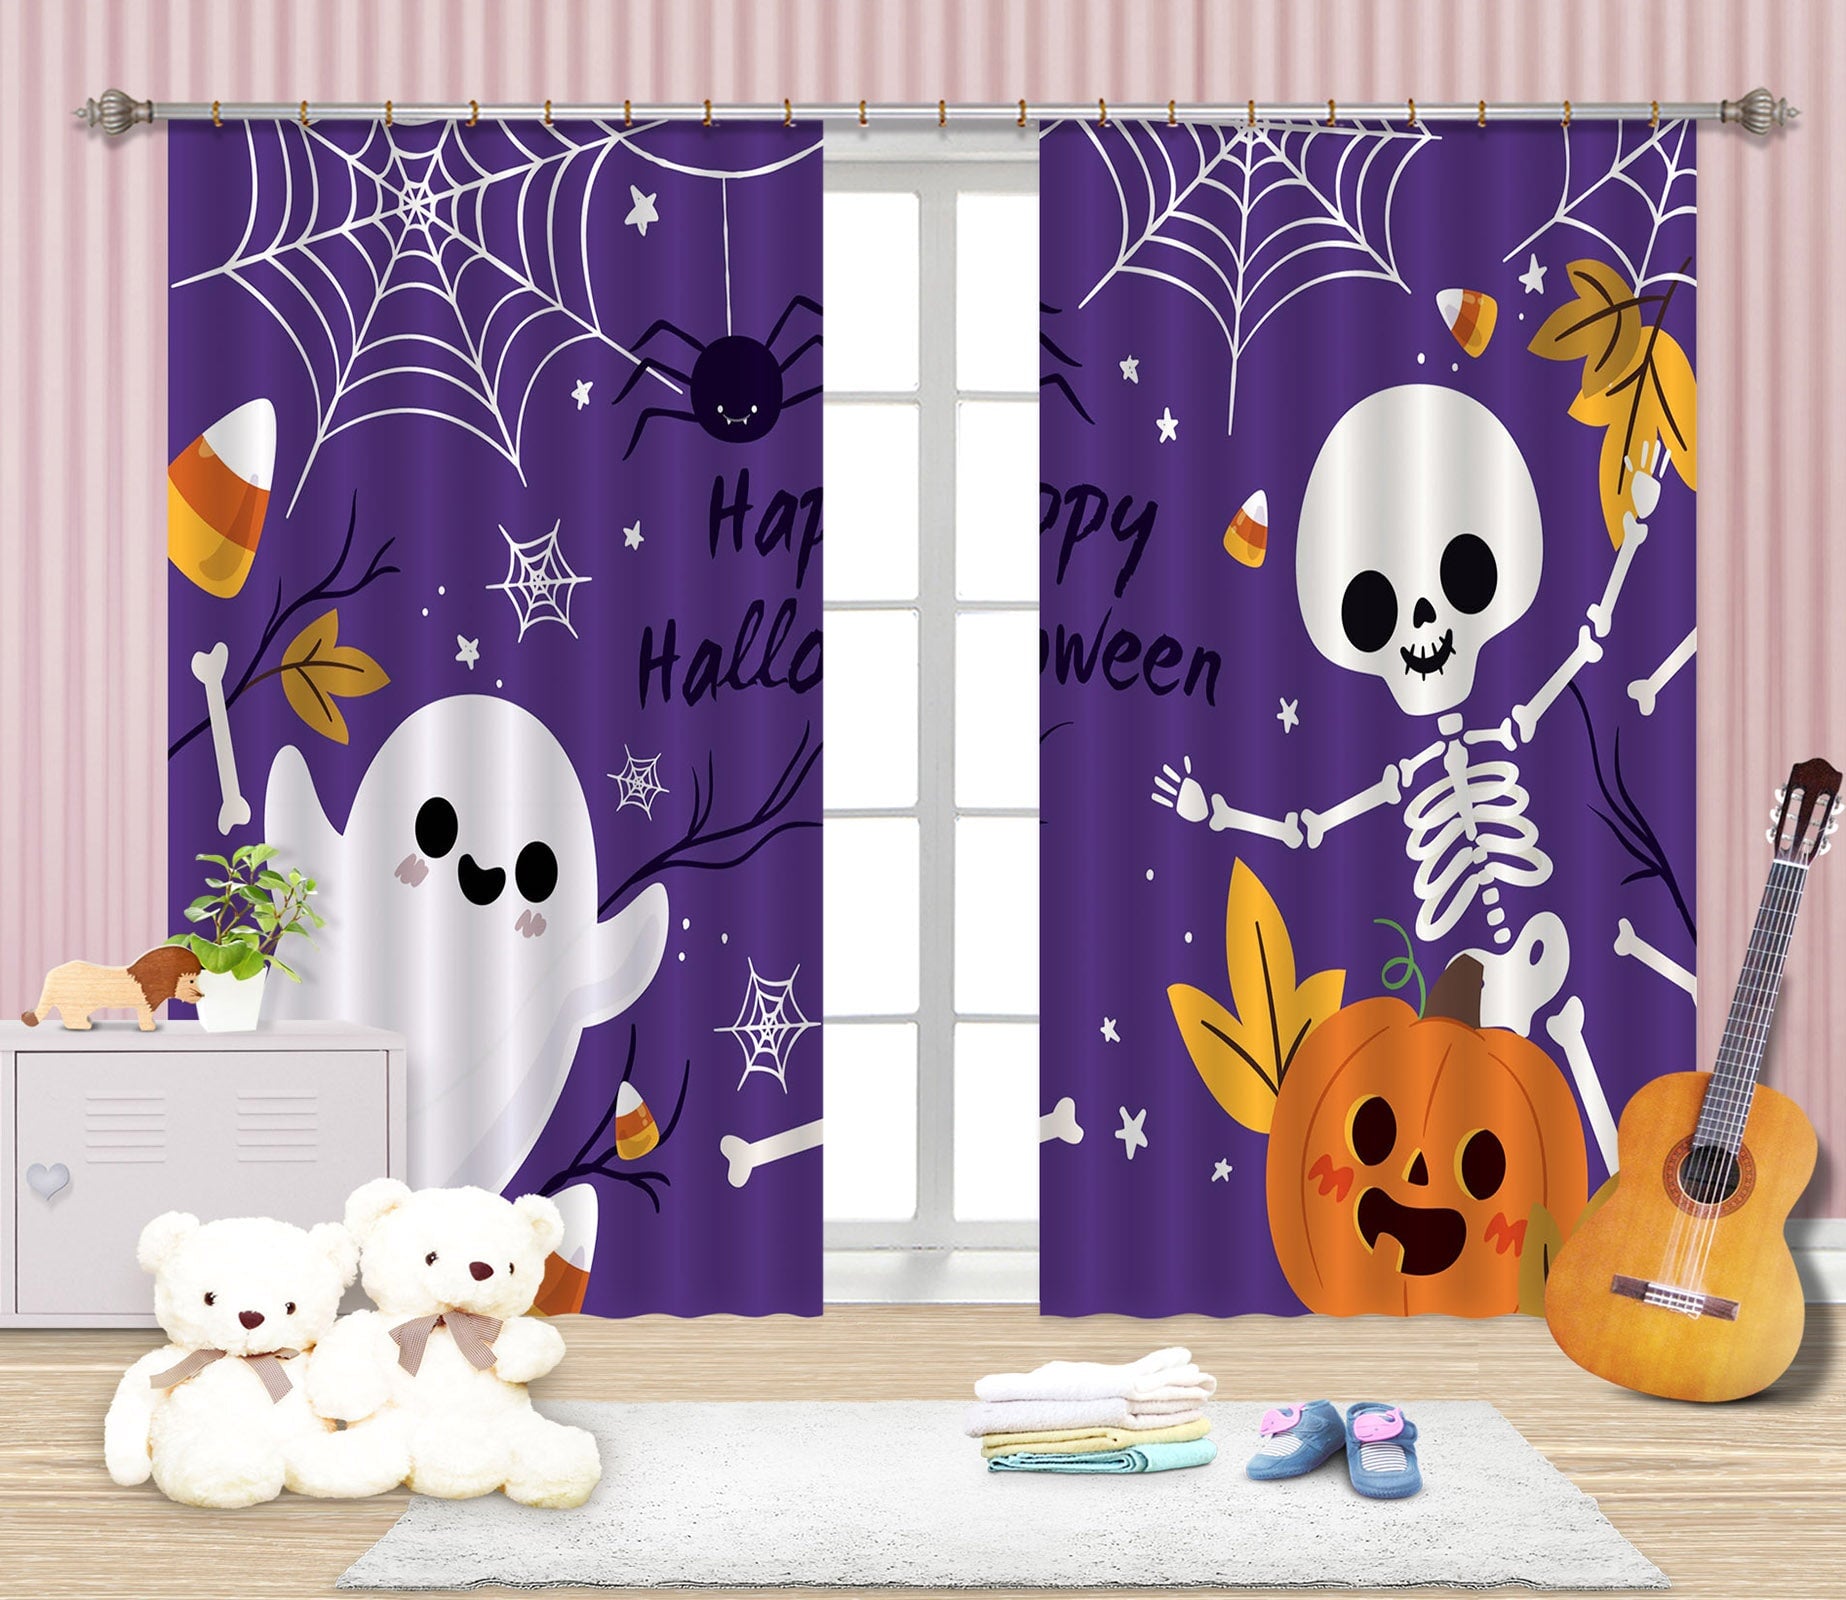 3D Ghost Spider Web 032 Halloween Curtains Drapes Curtains AJ Creativity Home 